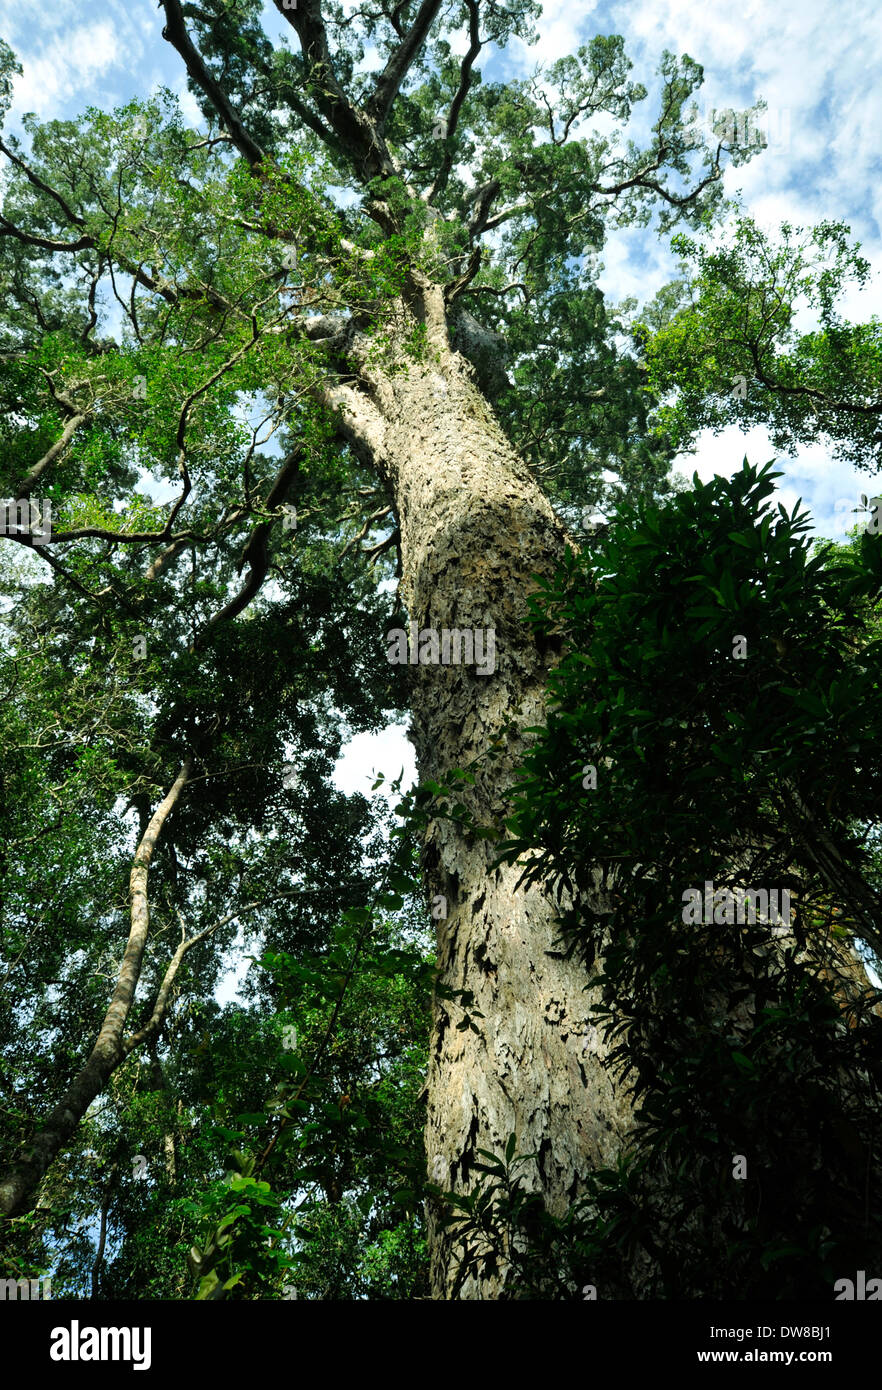 Tsitsikamma National Park, Garden Route, South Africa, Broad-leaved Yellowwood tree, Podocarpus latifolius, landmark, 1000 years old Stock Photo